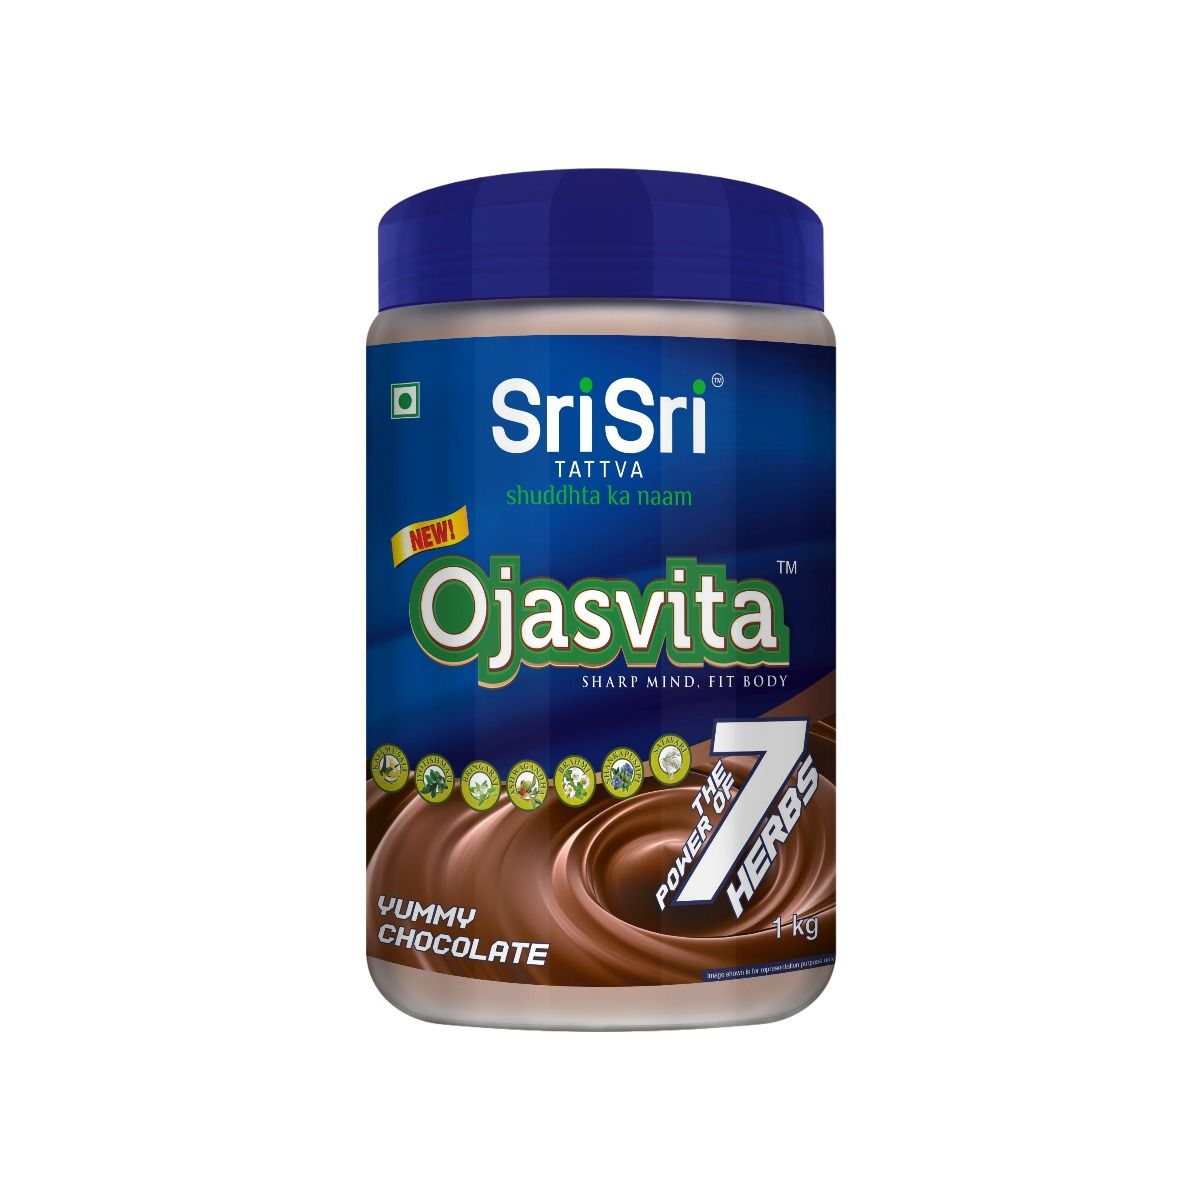 Buy Sri Sri Tattva Ojasvita Chocolate Flavour, 1 kg Online